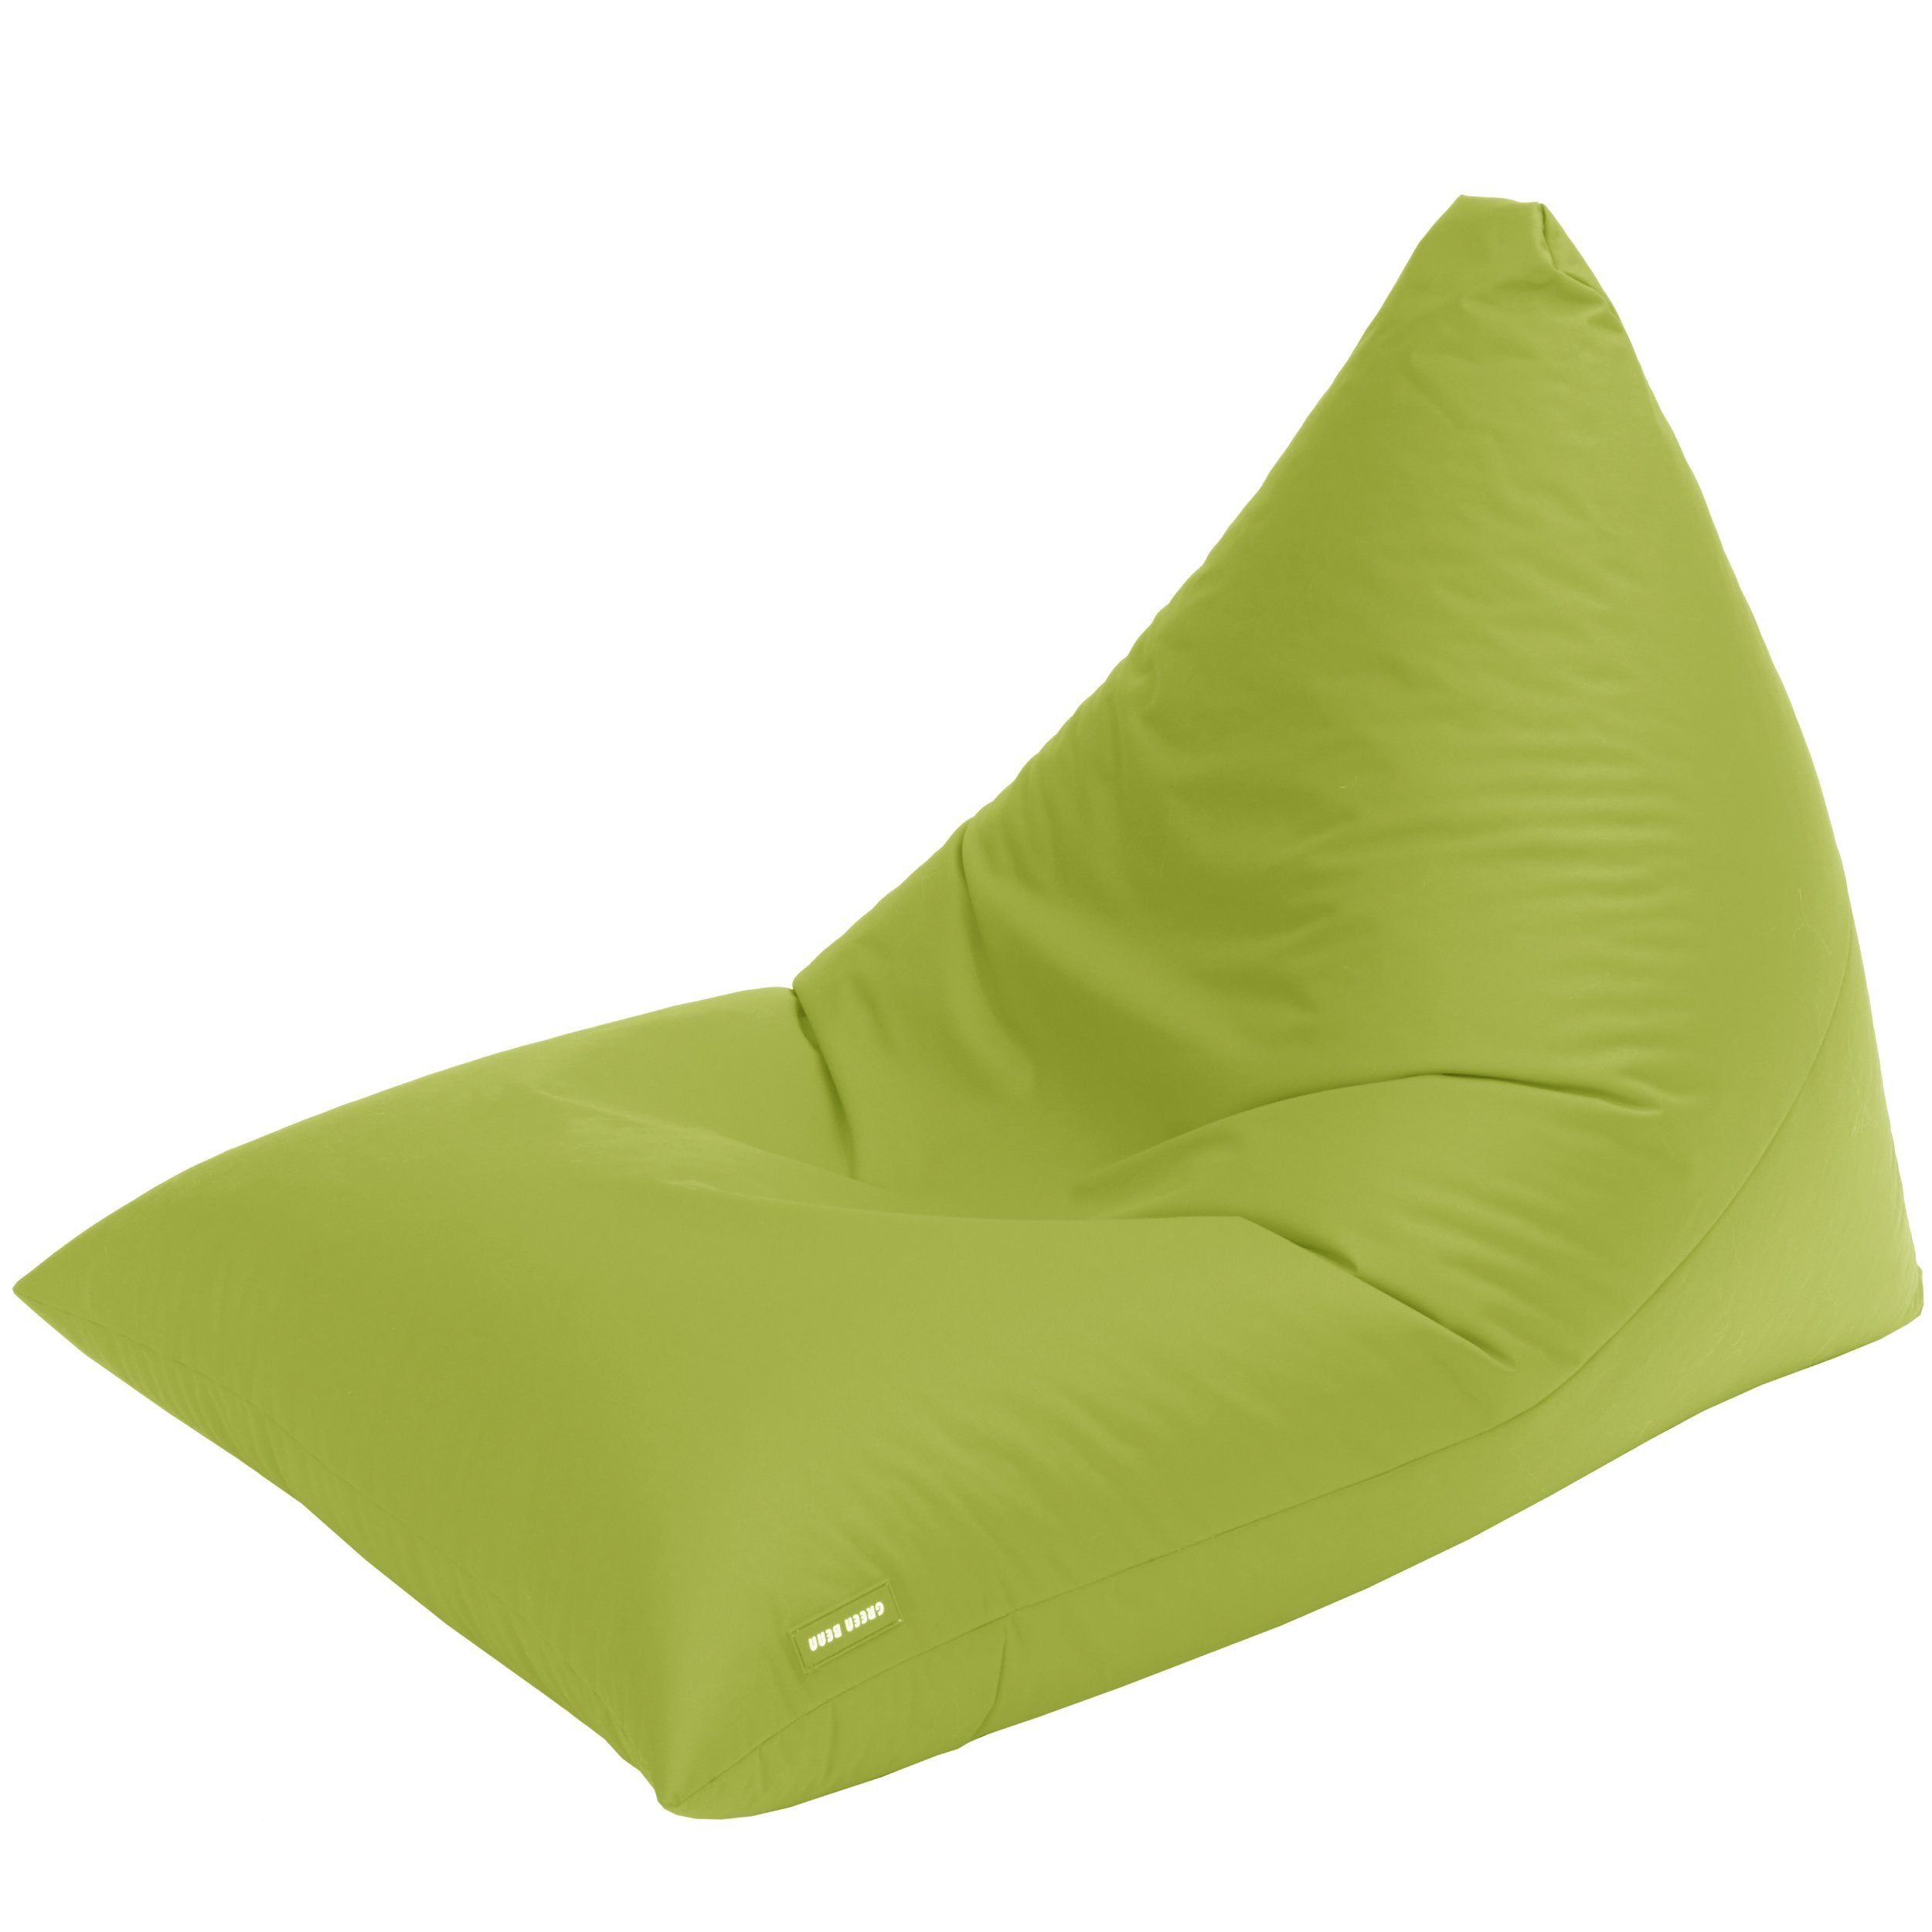 Green Bean Sitzsack Sitzsack Indoor & Outdoor 120x100x80cm, Bodenkissen Liegekissen Sitzkissen Bean Bag Grün